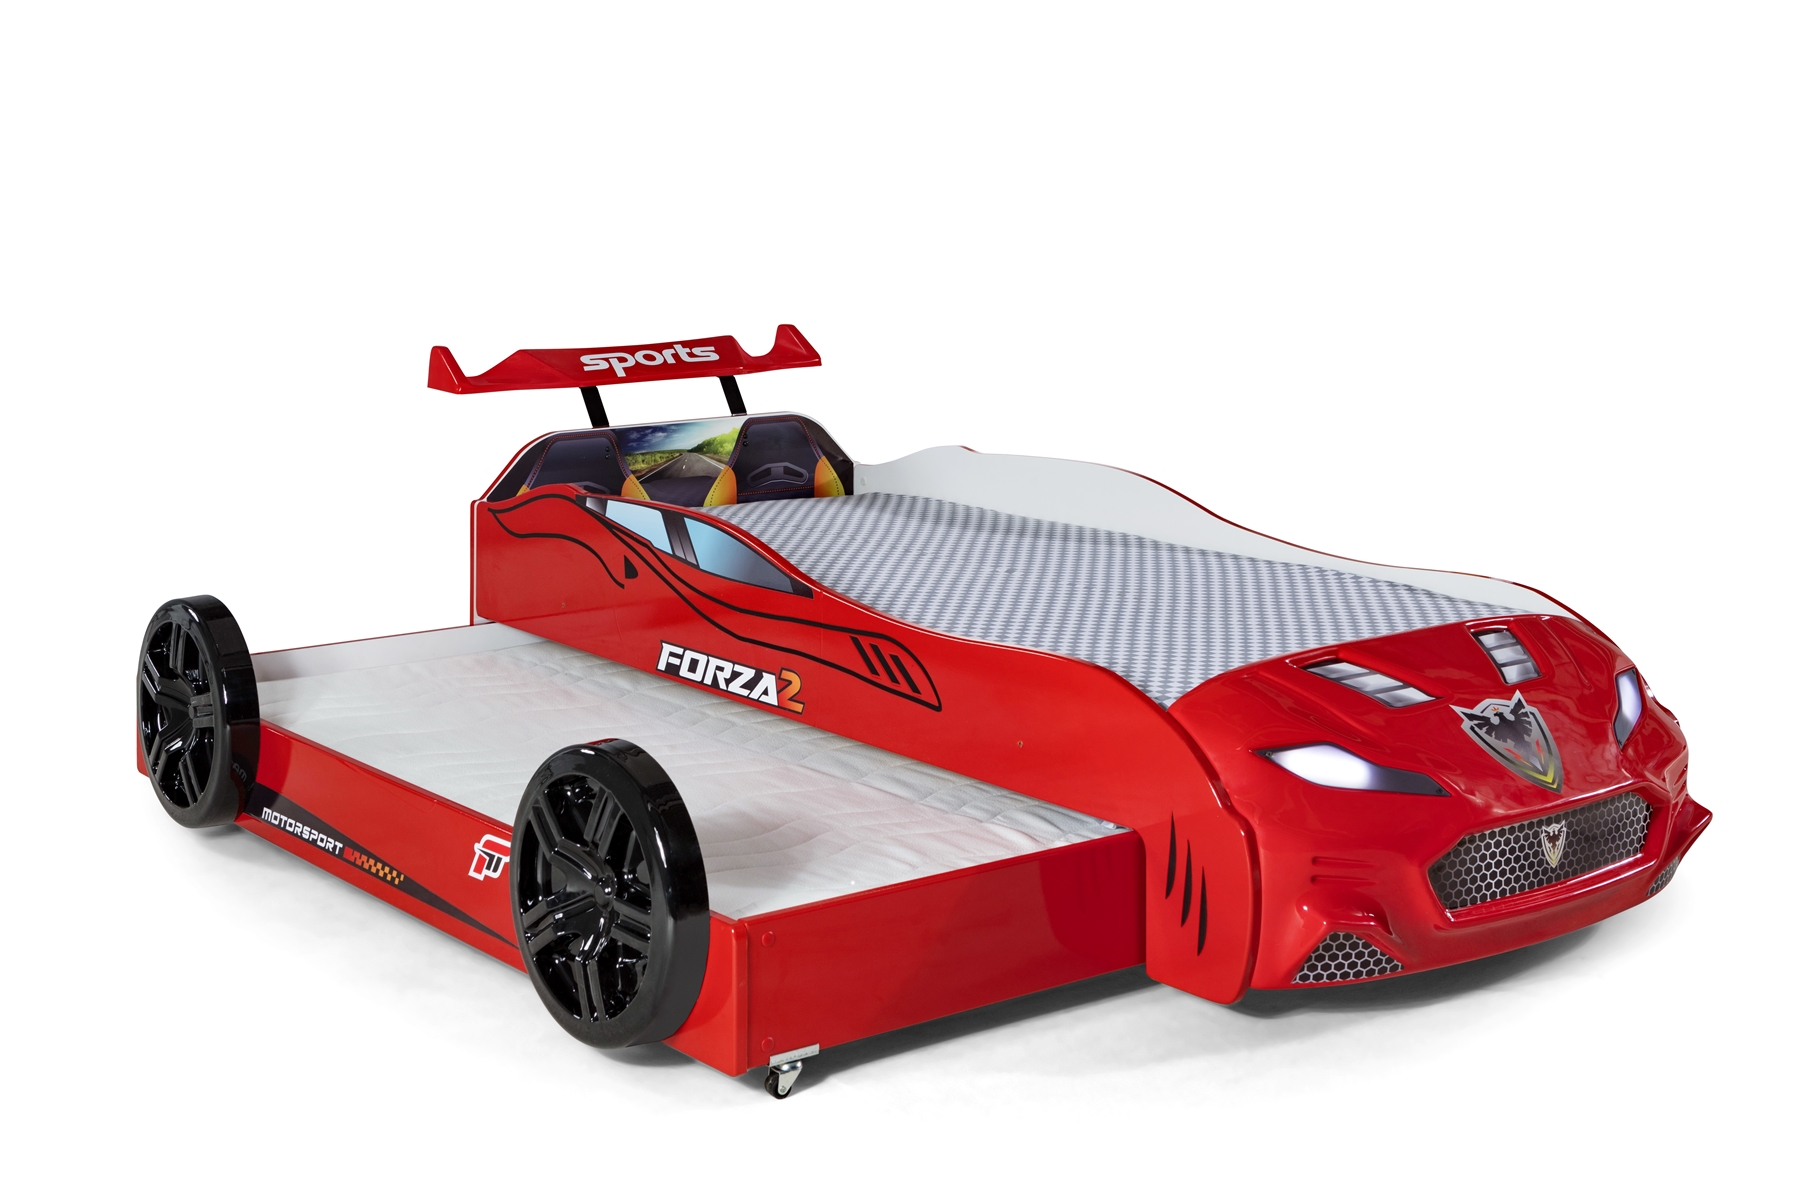 Autobett Kinderzimmer Forza 2 Turbo 4-teilig in Rot